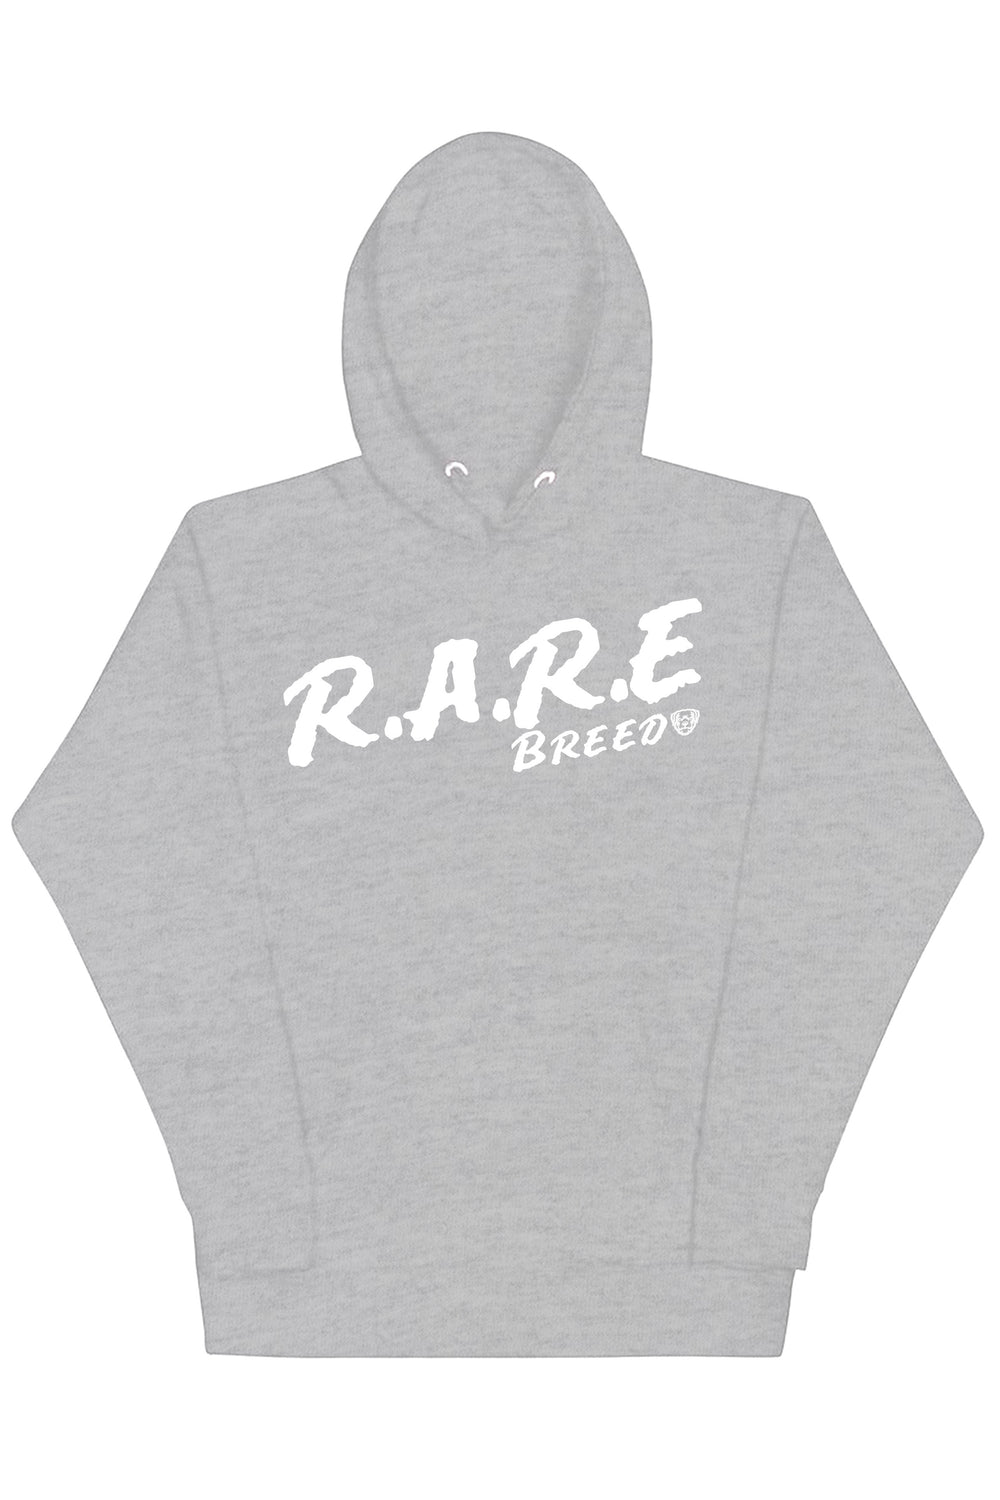 Rare Breed Hoodie (White Logo) - Zamage